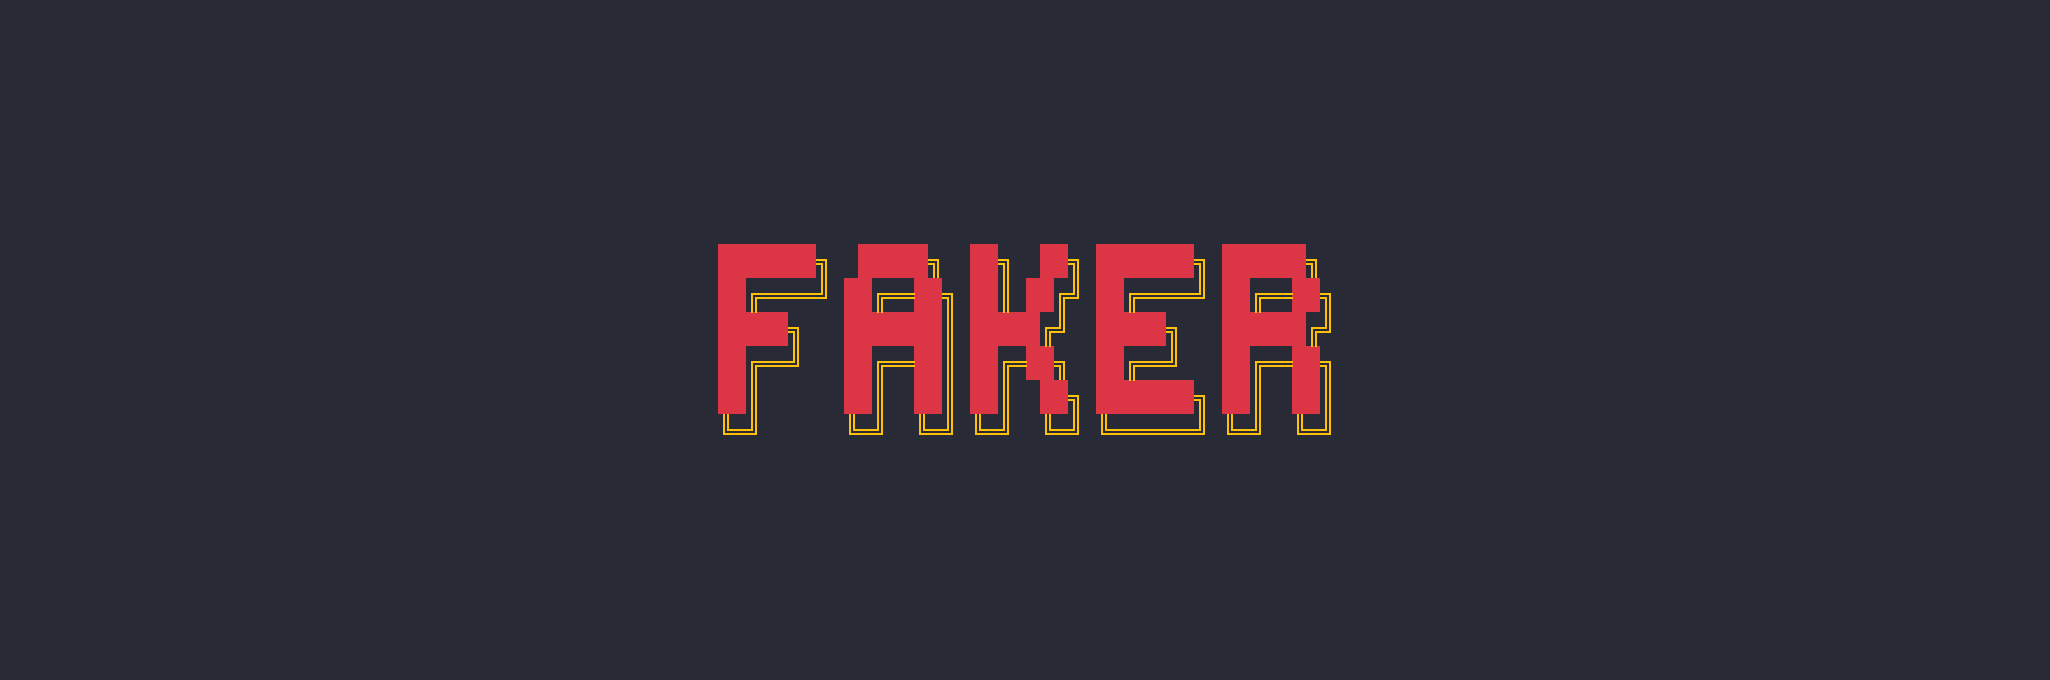 faker - npm